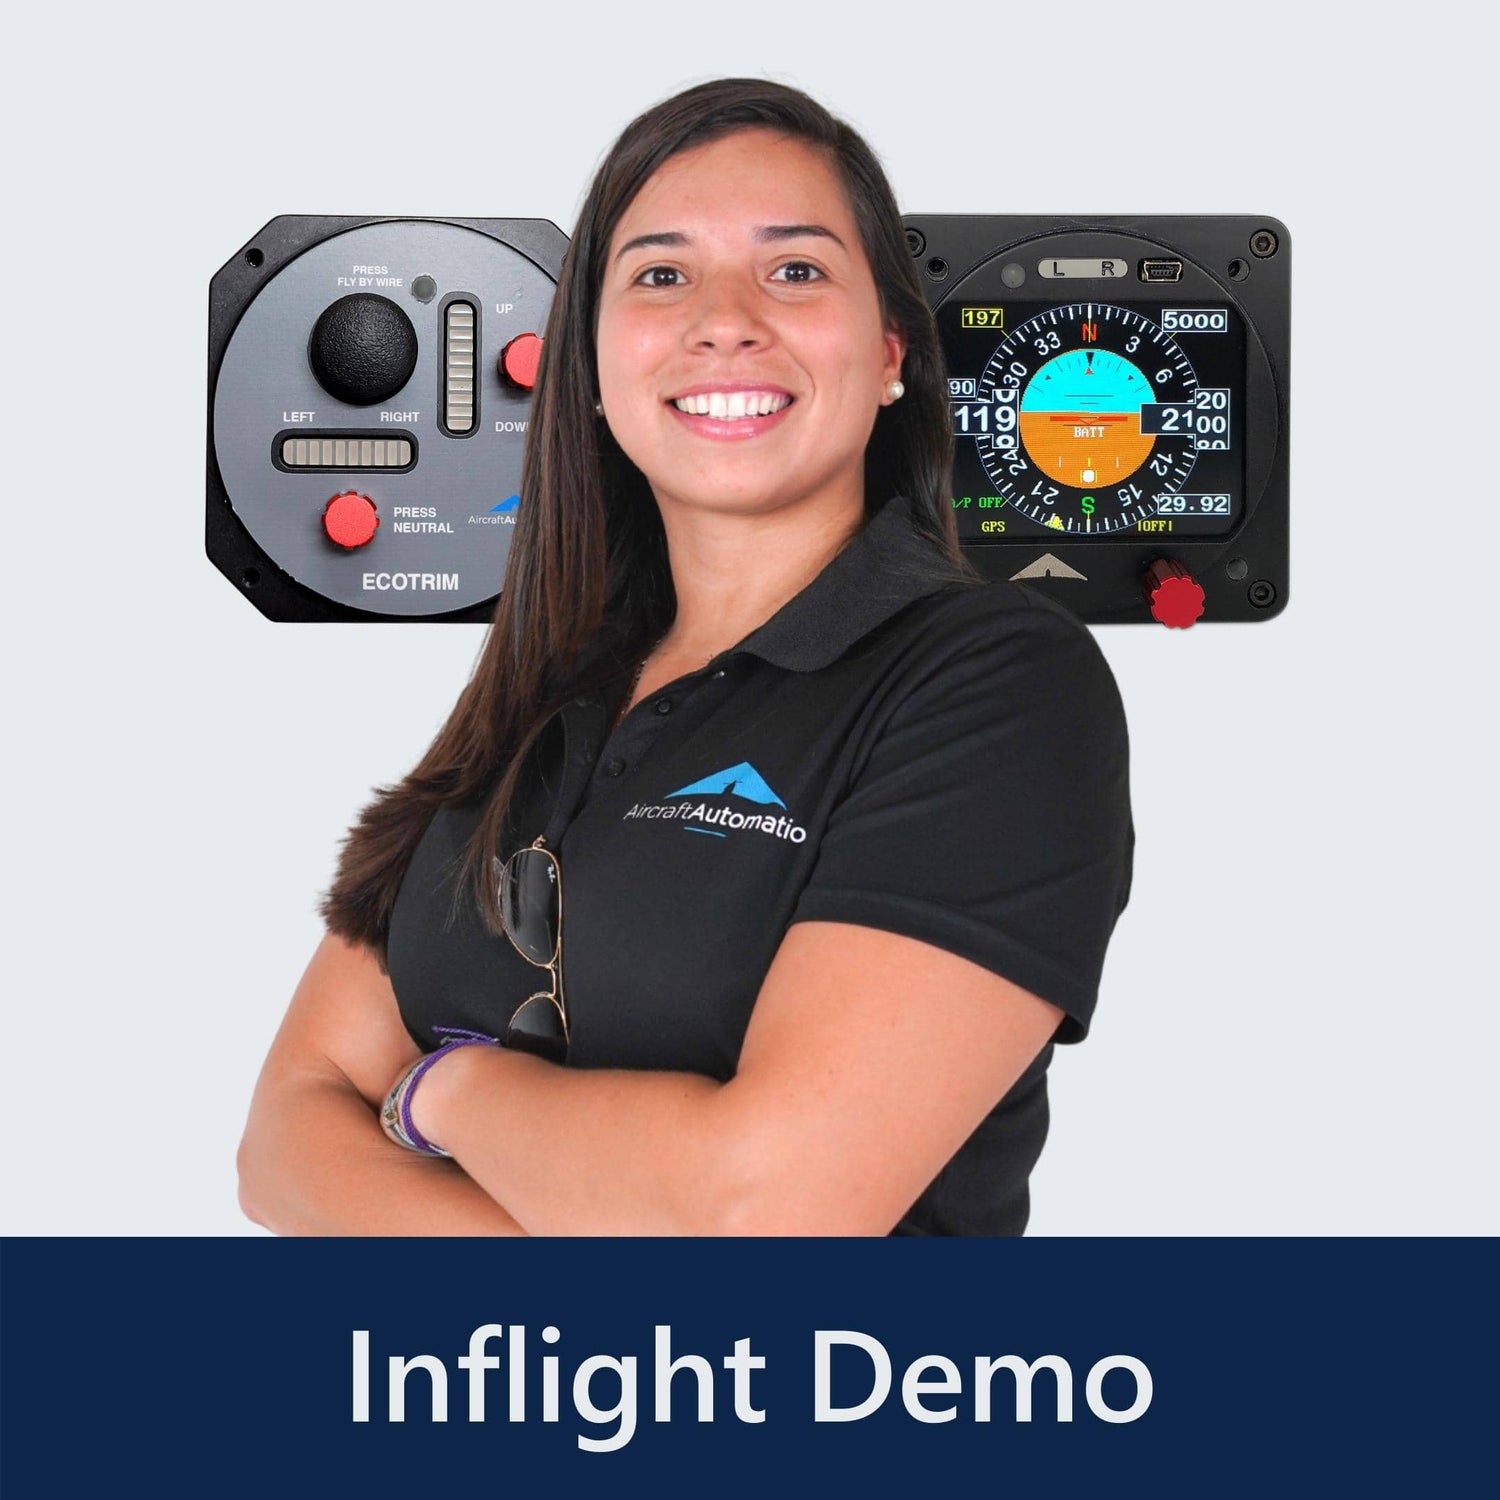 Inflight Demo Aircraft Automation SuperECO Autopilot & ECOTrim System